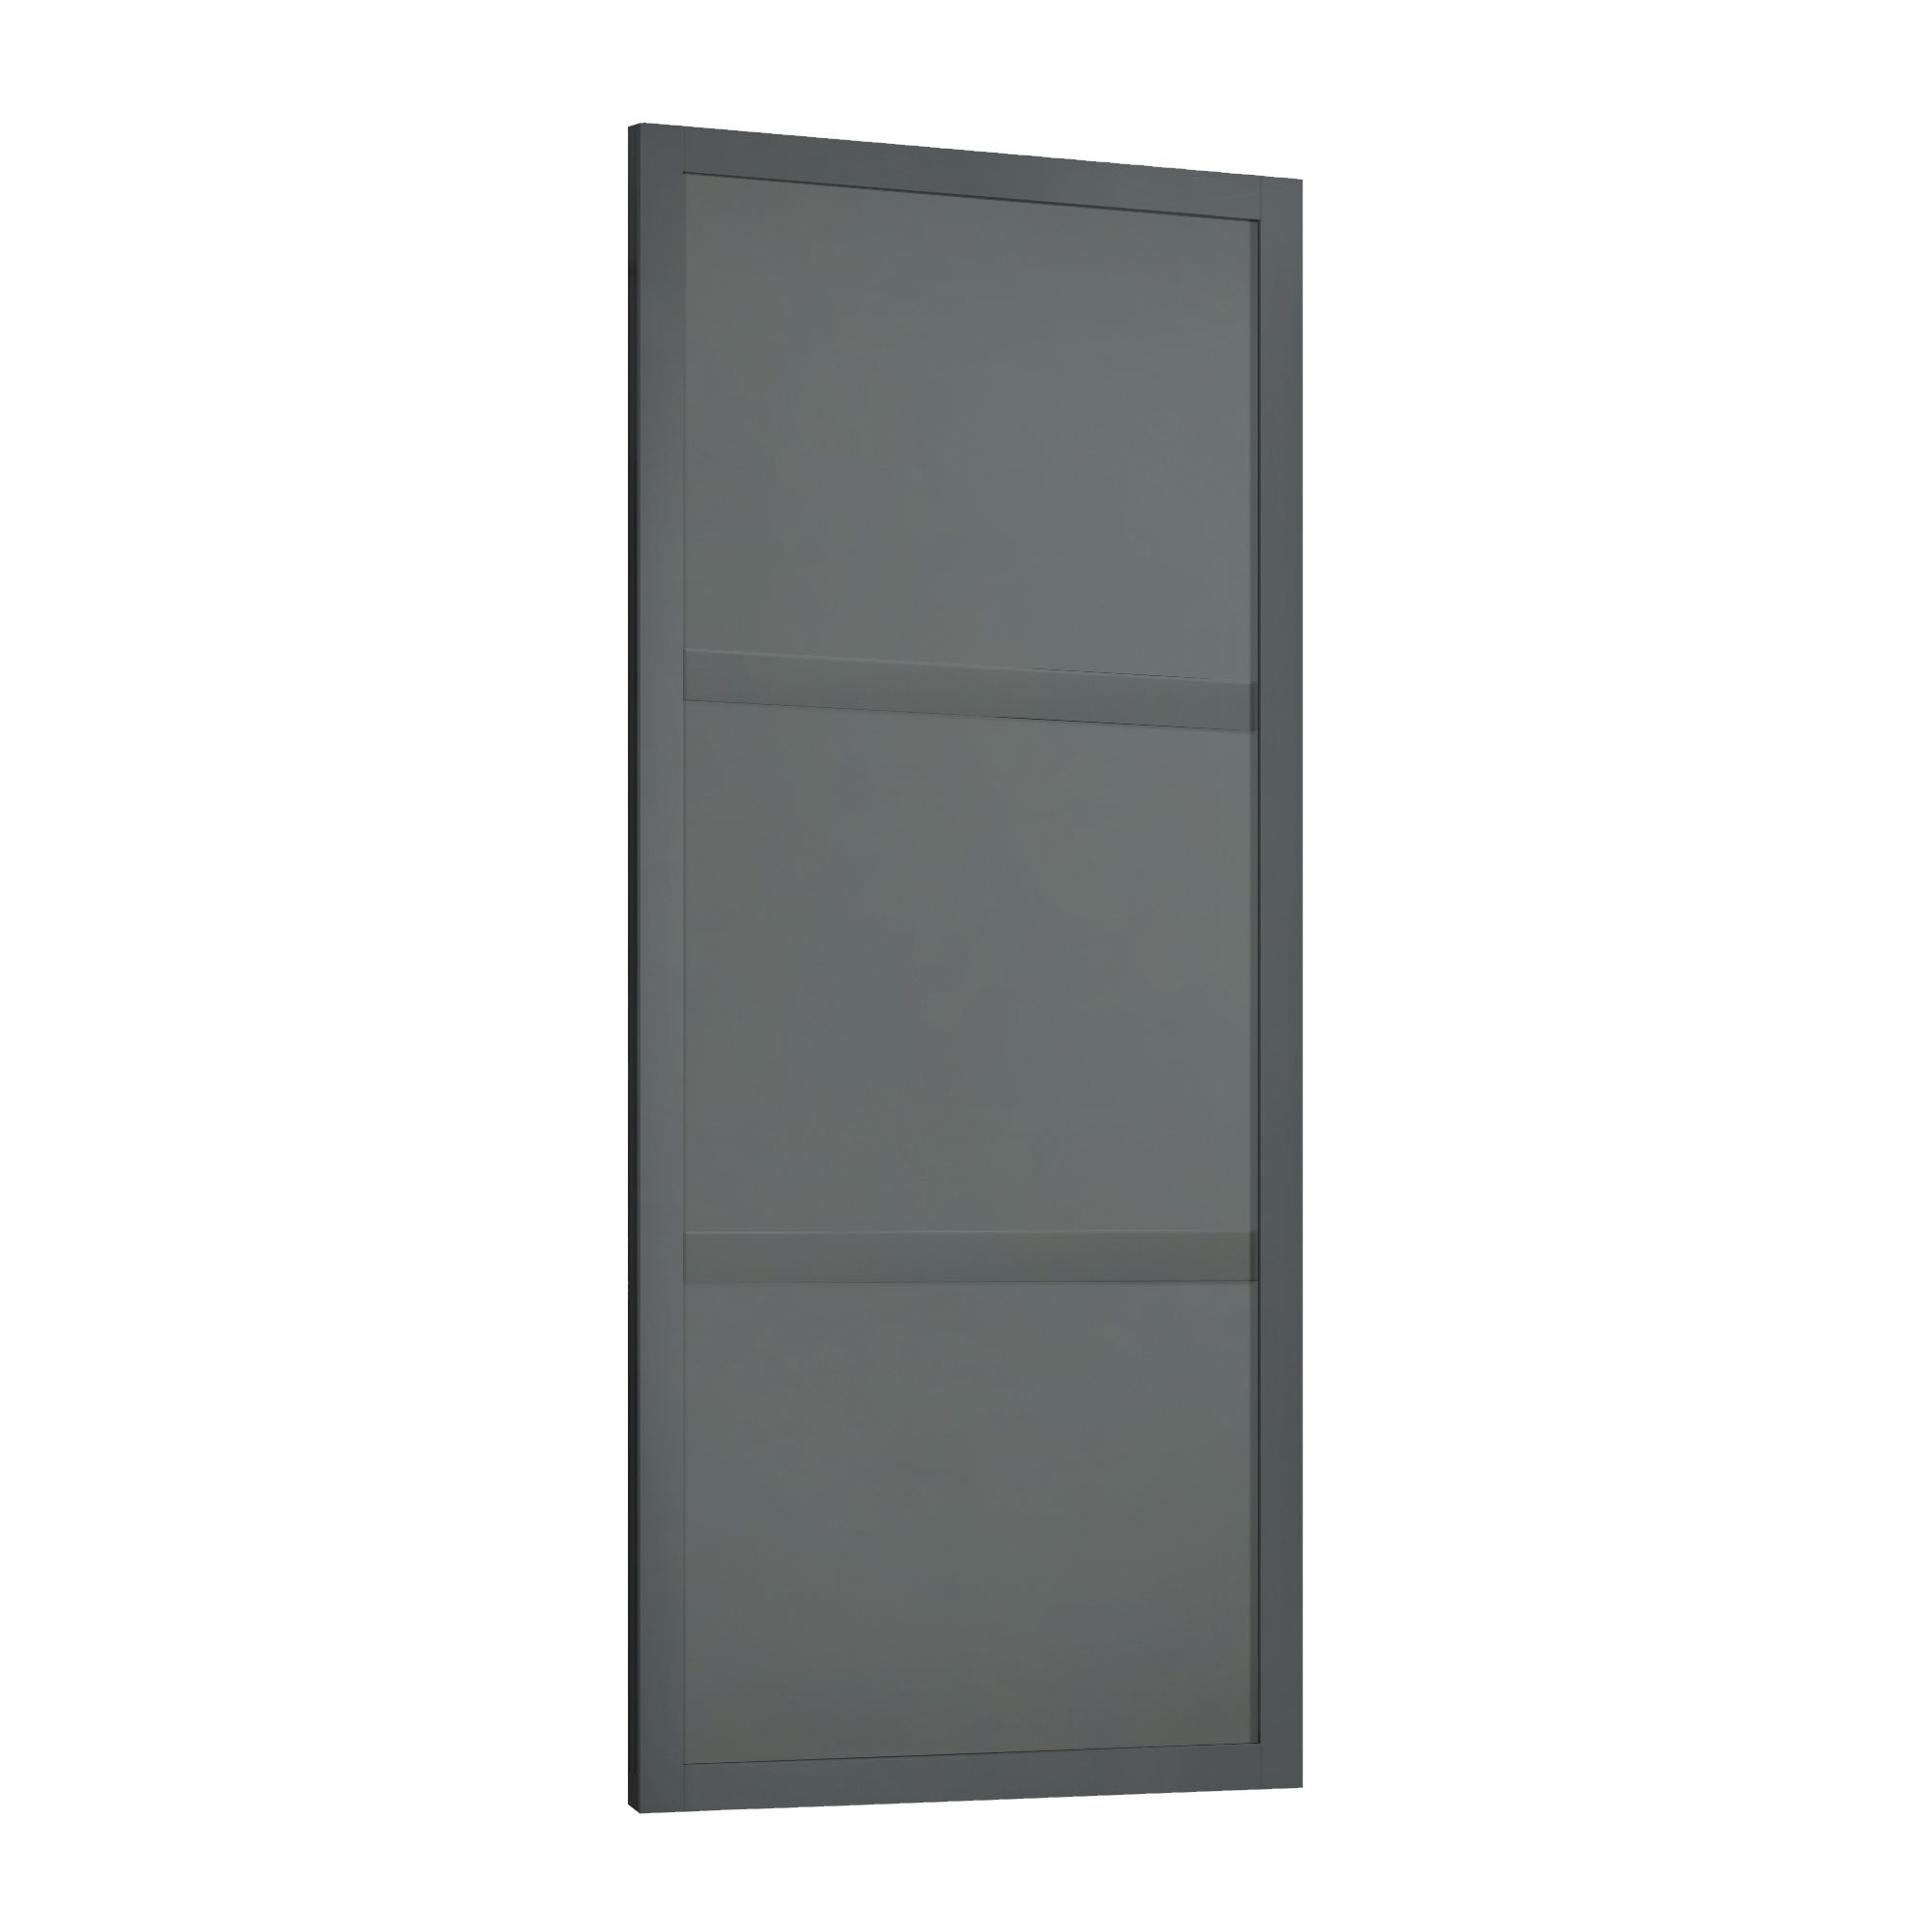 Spacepro Shaker Matt Dark Grey 3 panel 1 mirror Sliding wardrobe door (H) 2220mm x (W) 914mm